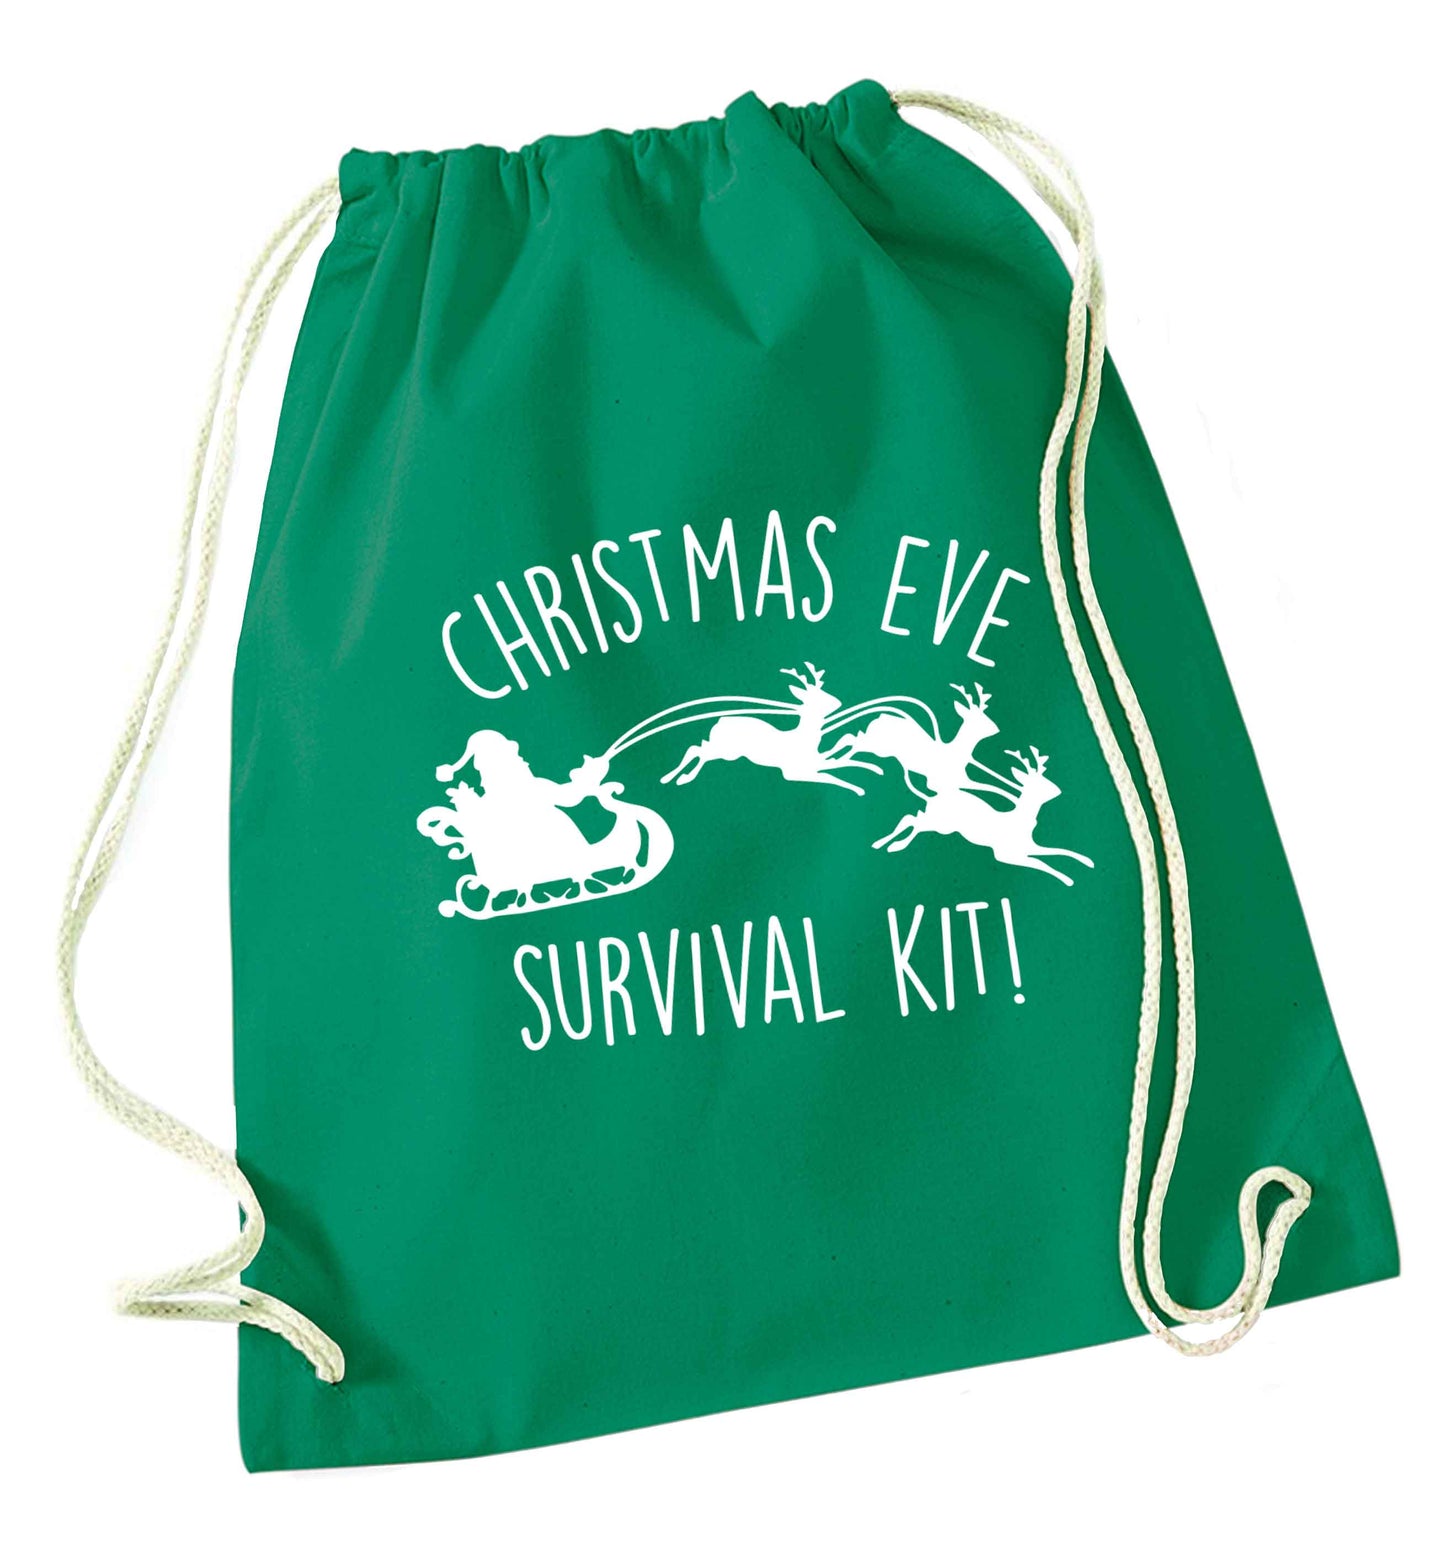 Christmas Day Survival Kitgreen drawstring bag